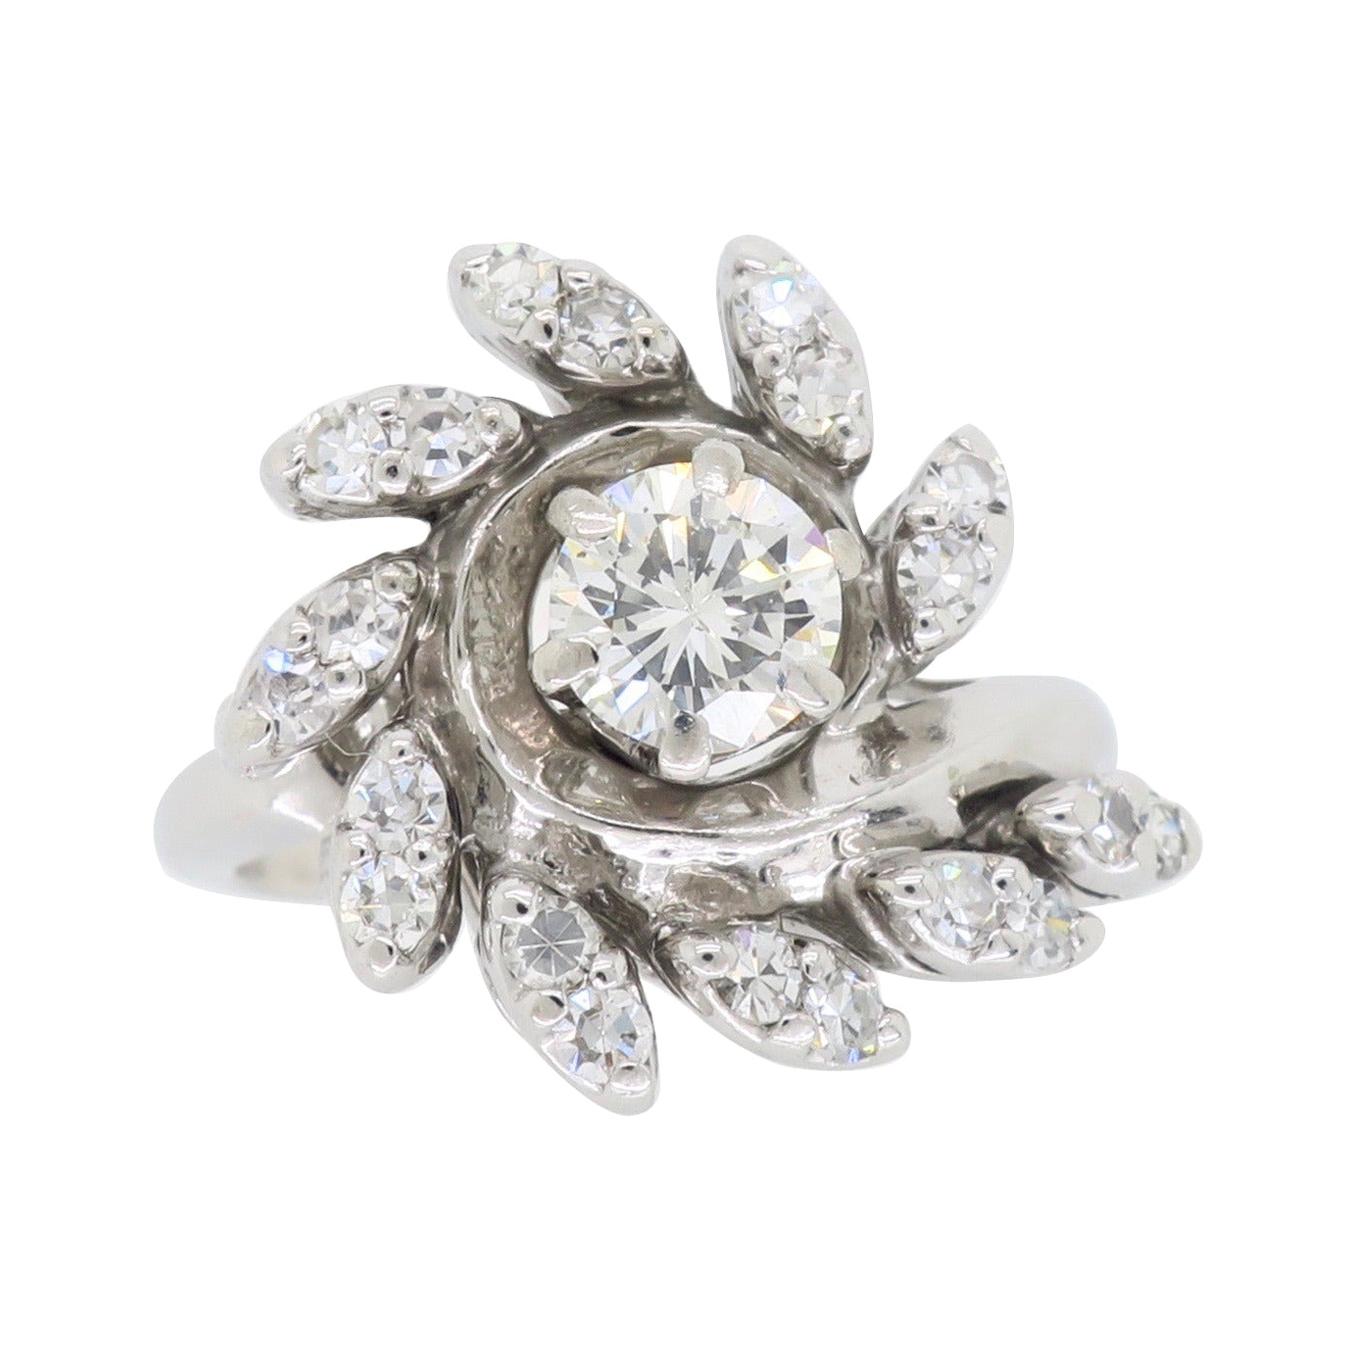 Vintage Diamond Swirl Ring